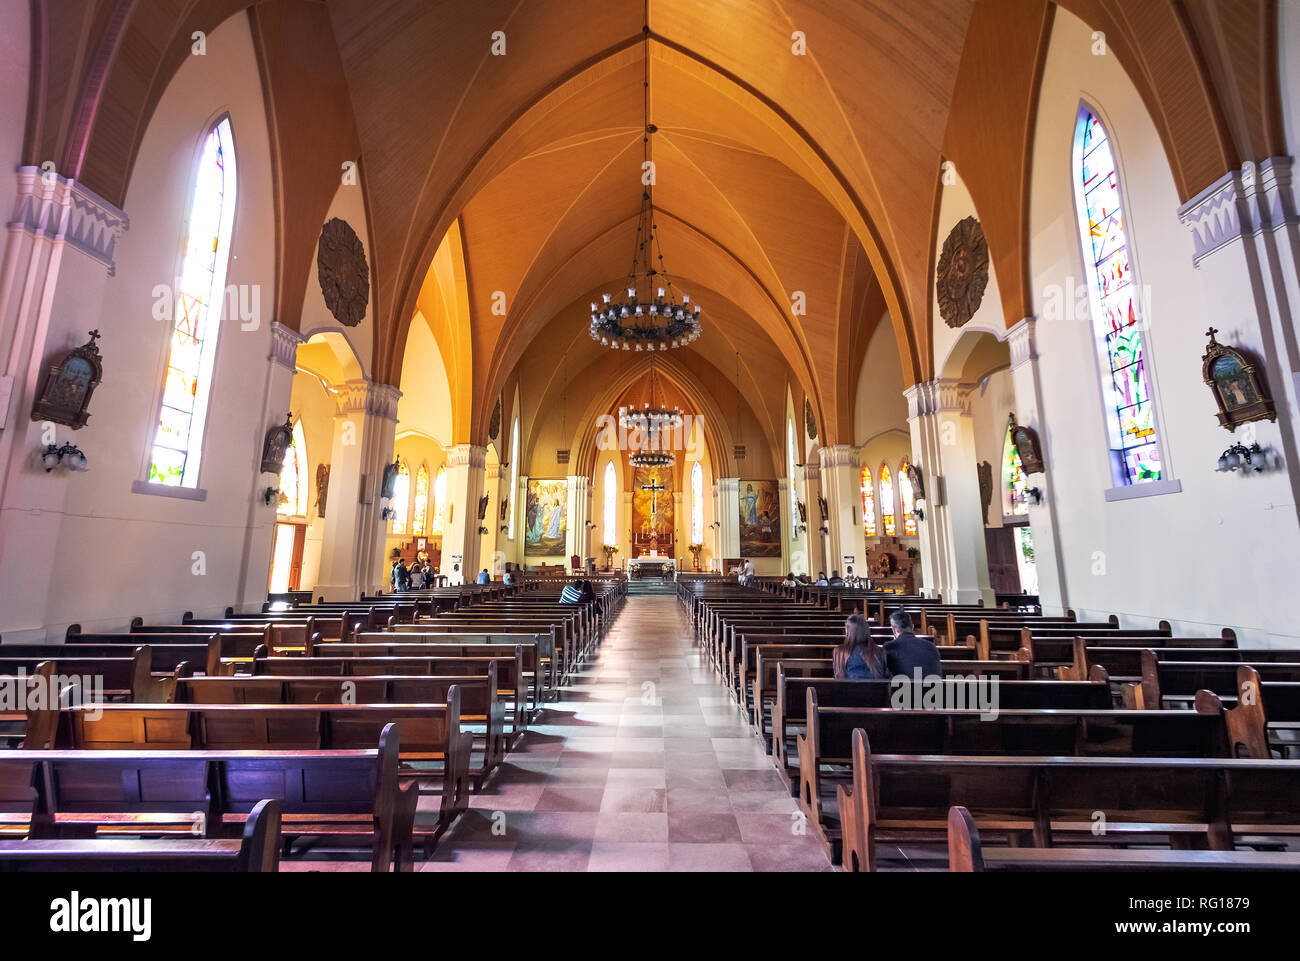 Canela Stone Cathedral (Our Lady of Lourdes church) interior - Canela, Rio Grande do Sul, Brazil Stock Photo